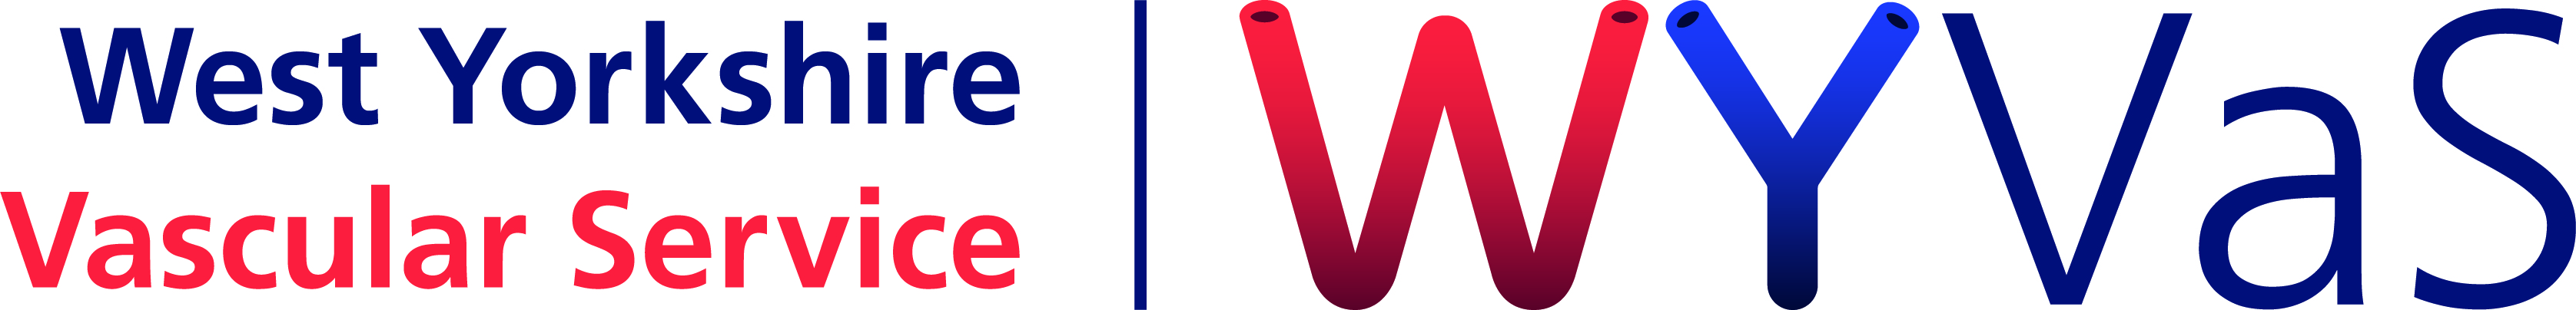 wyvas-logo-colour.jpg